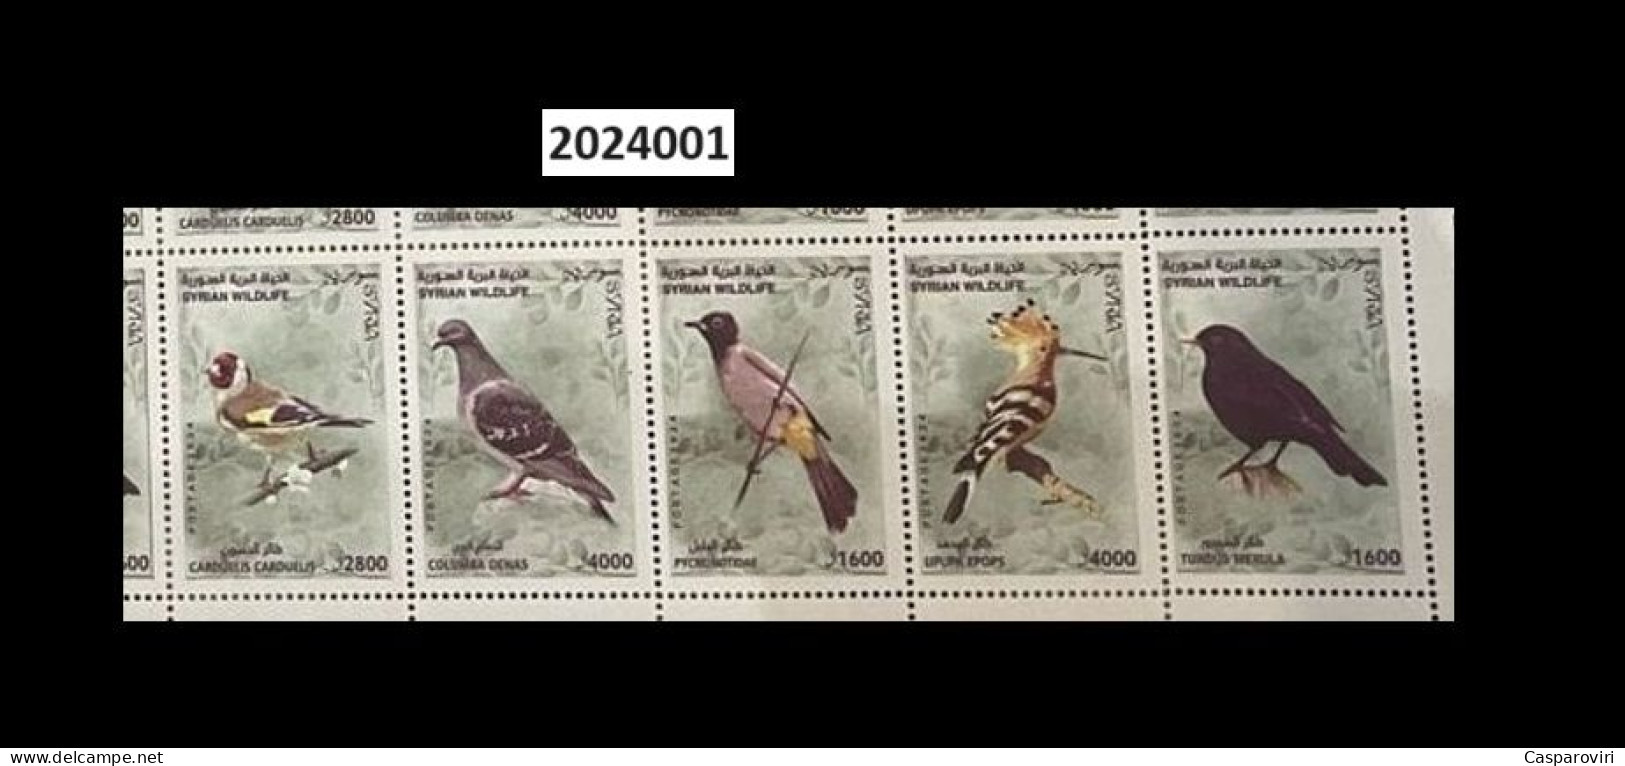 2024401; Syria; 2024; Strip Of 5 Stamps On Envelope; Syrian Wildlife; Syrian Birds; 5 Different Stamps; Canceled - Syrië